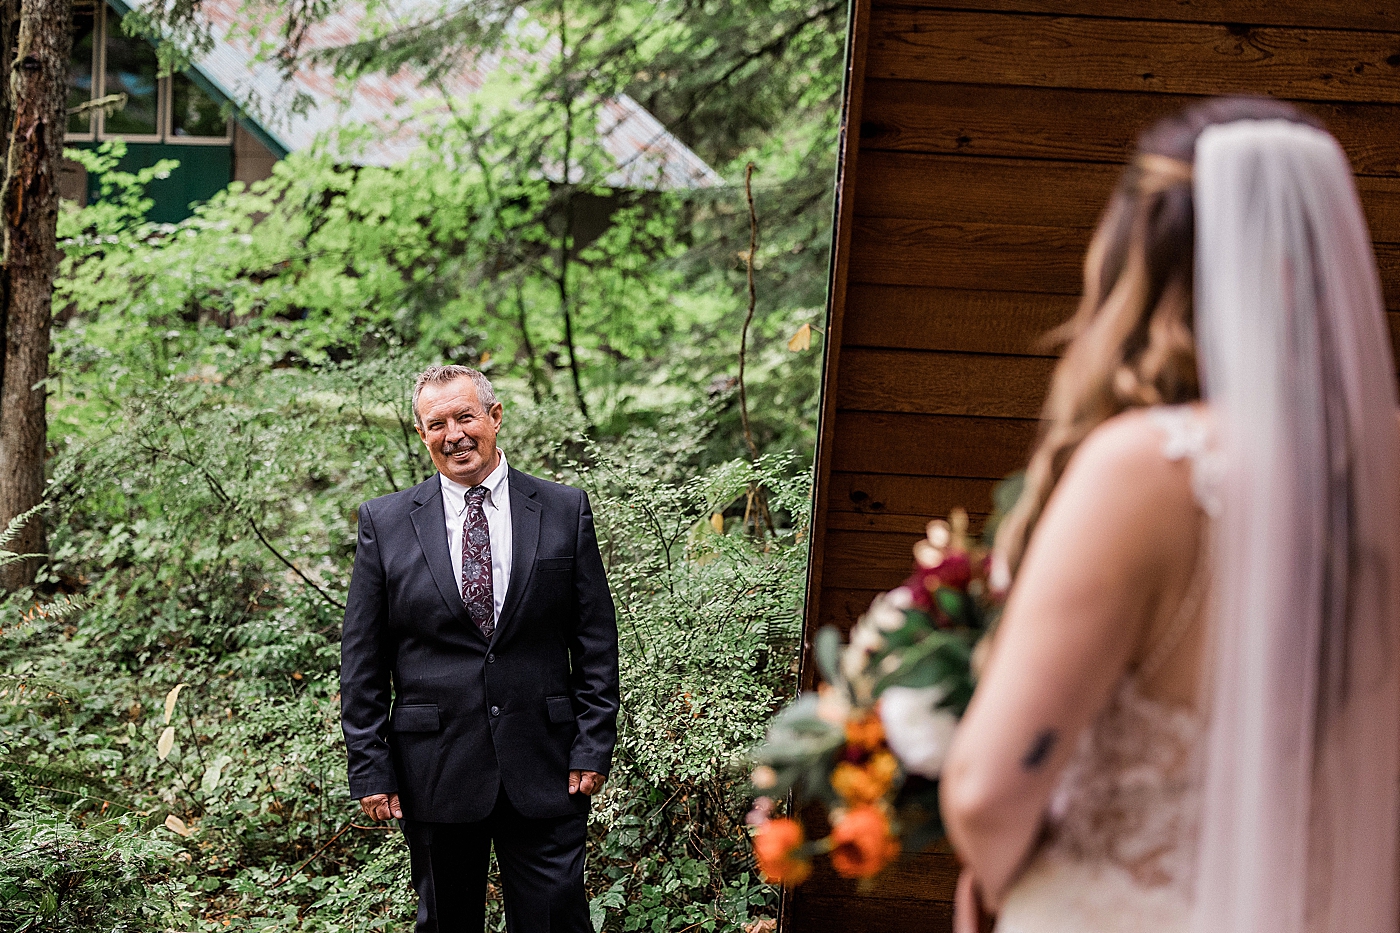 First look between bride and her dad | Megan Montalvo Photography